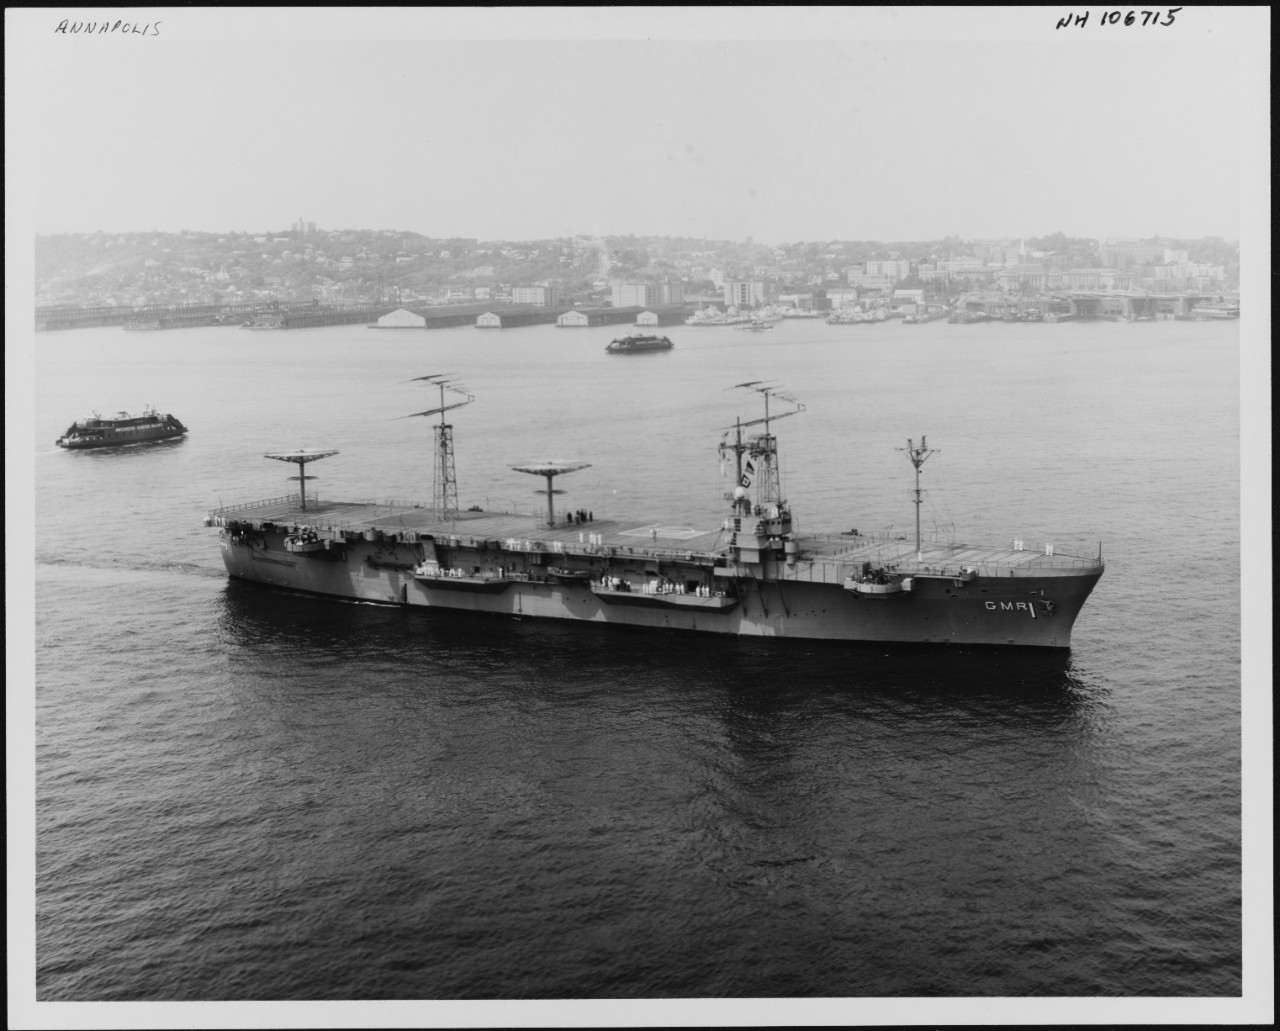 Photo # NH 106715  USS Annapolis